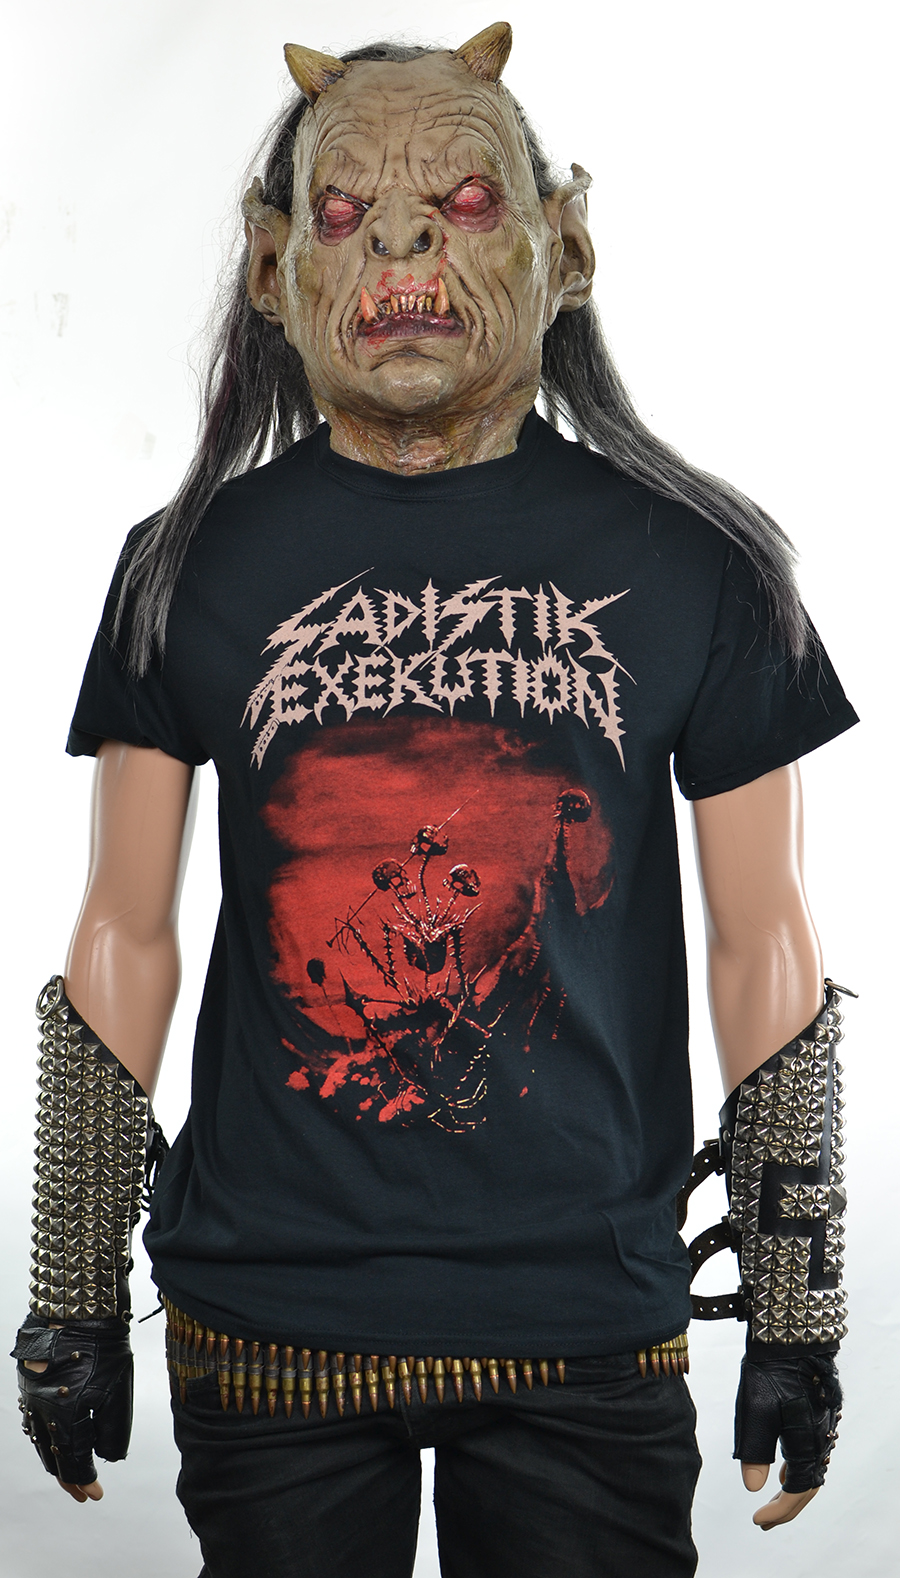 SADISTIK EXEKUTION - We Are Death... Fuck You (2021 Edition)